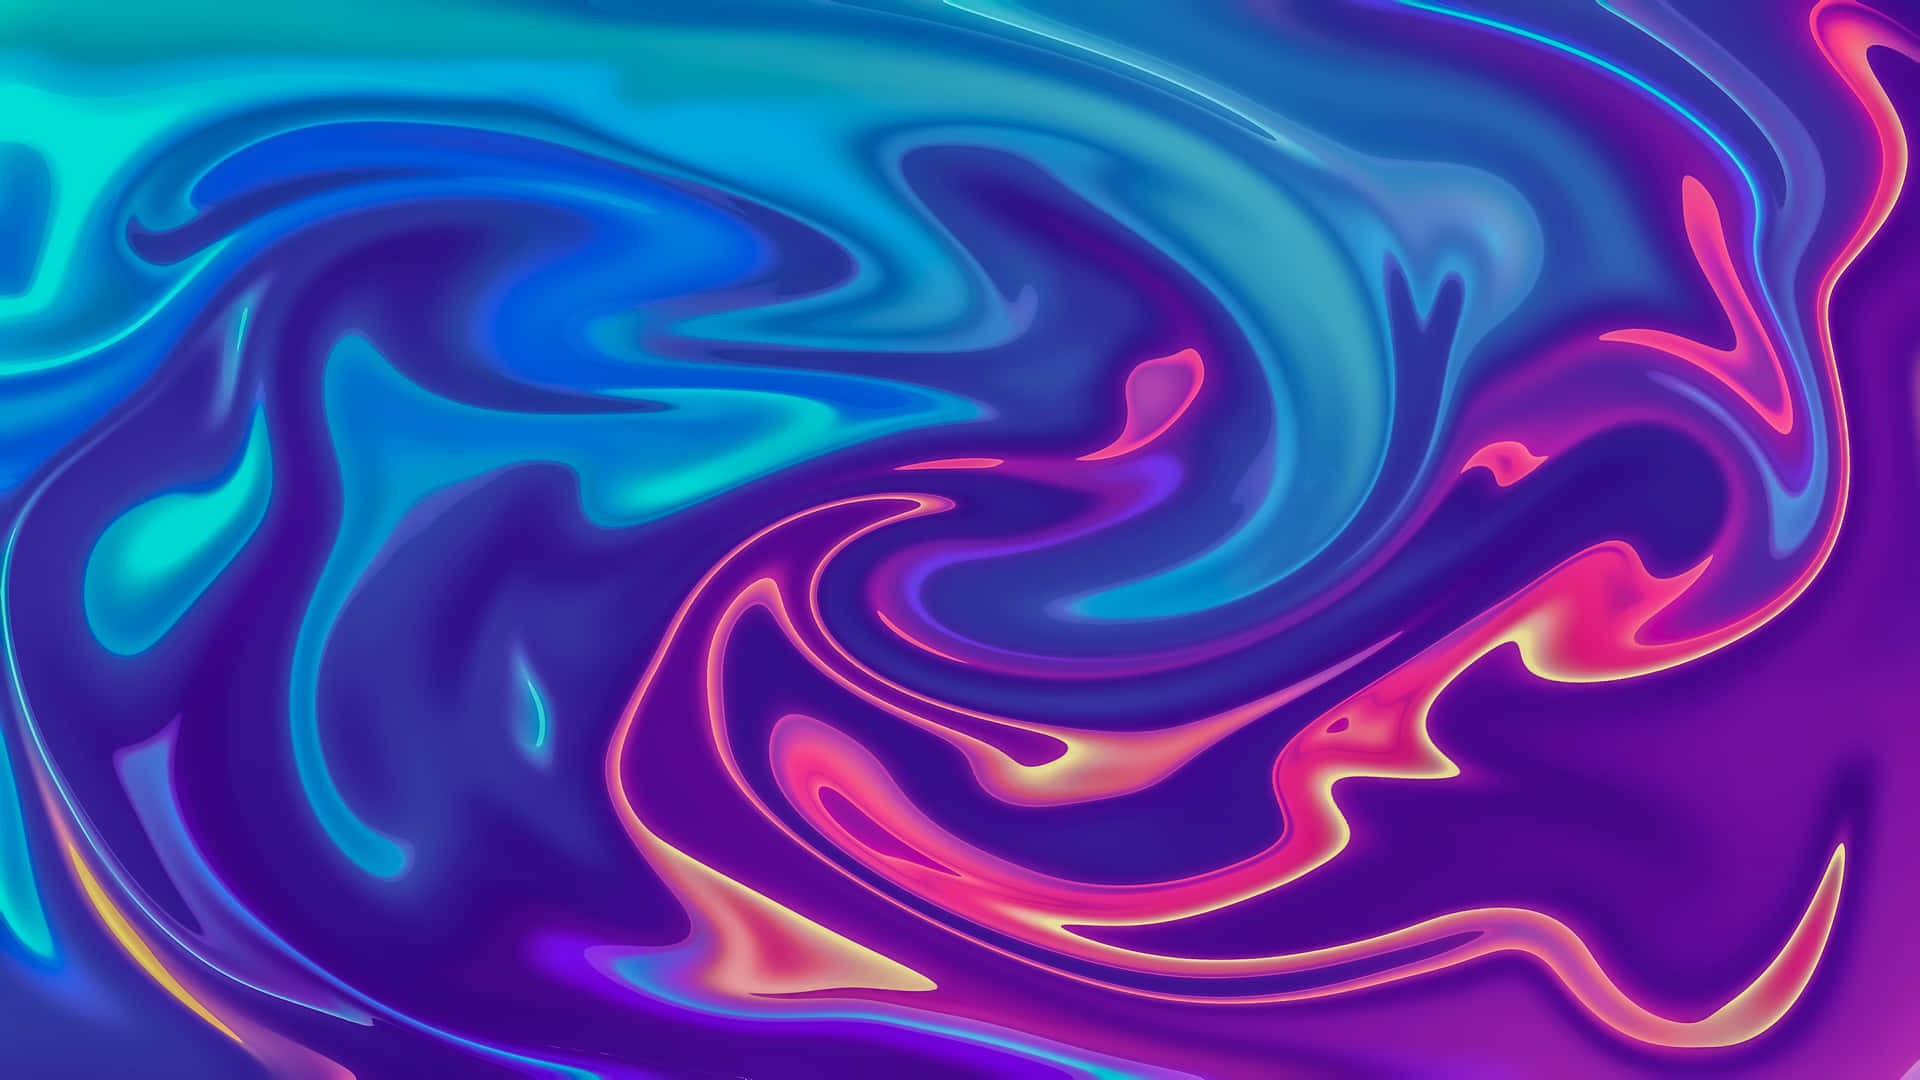 Blue And Pink Liquid Swirls Background